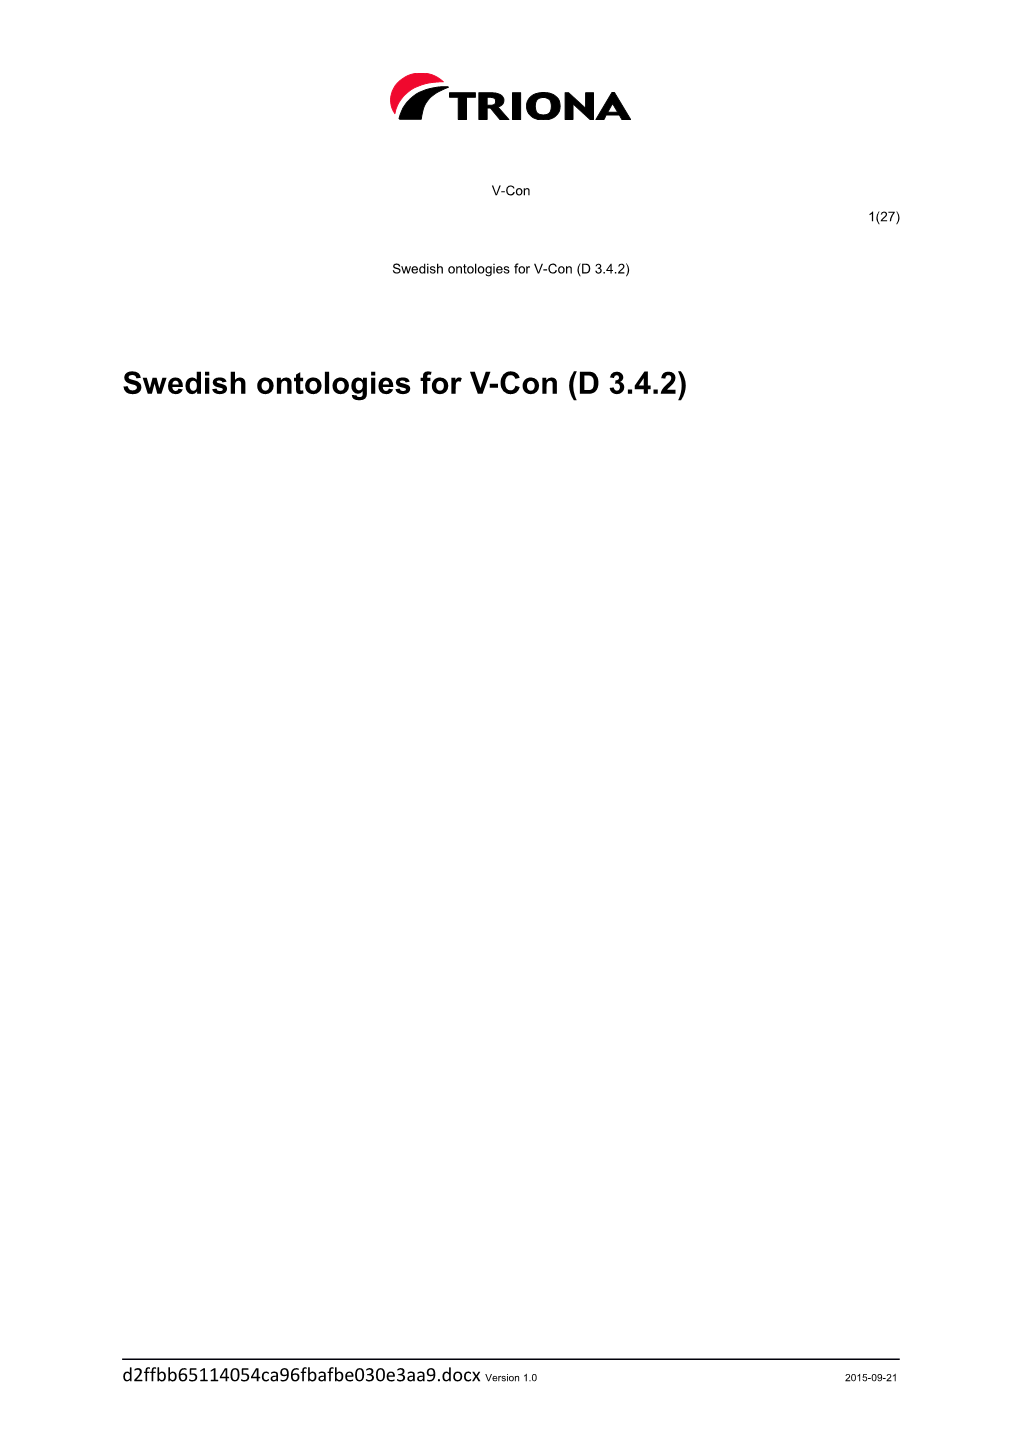 Swedish Ontologies for V-Con (D 3.4.2)